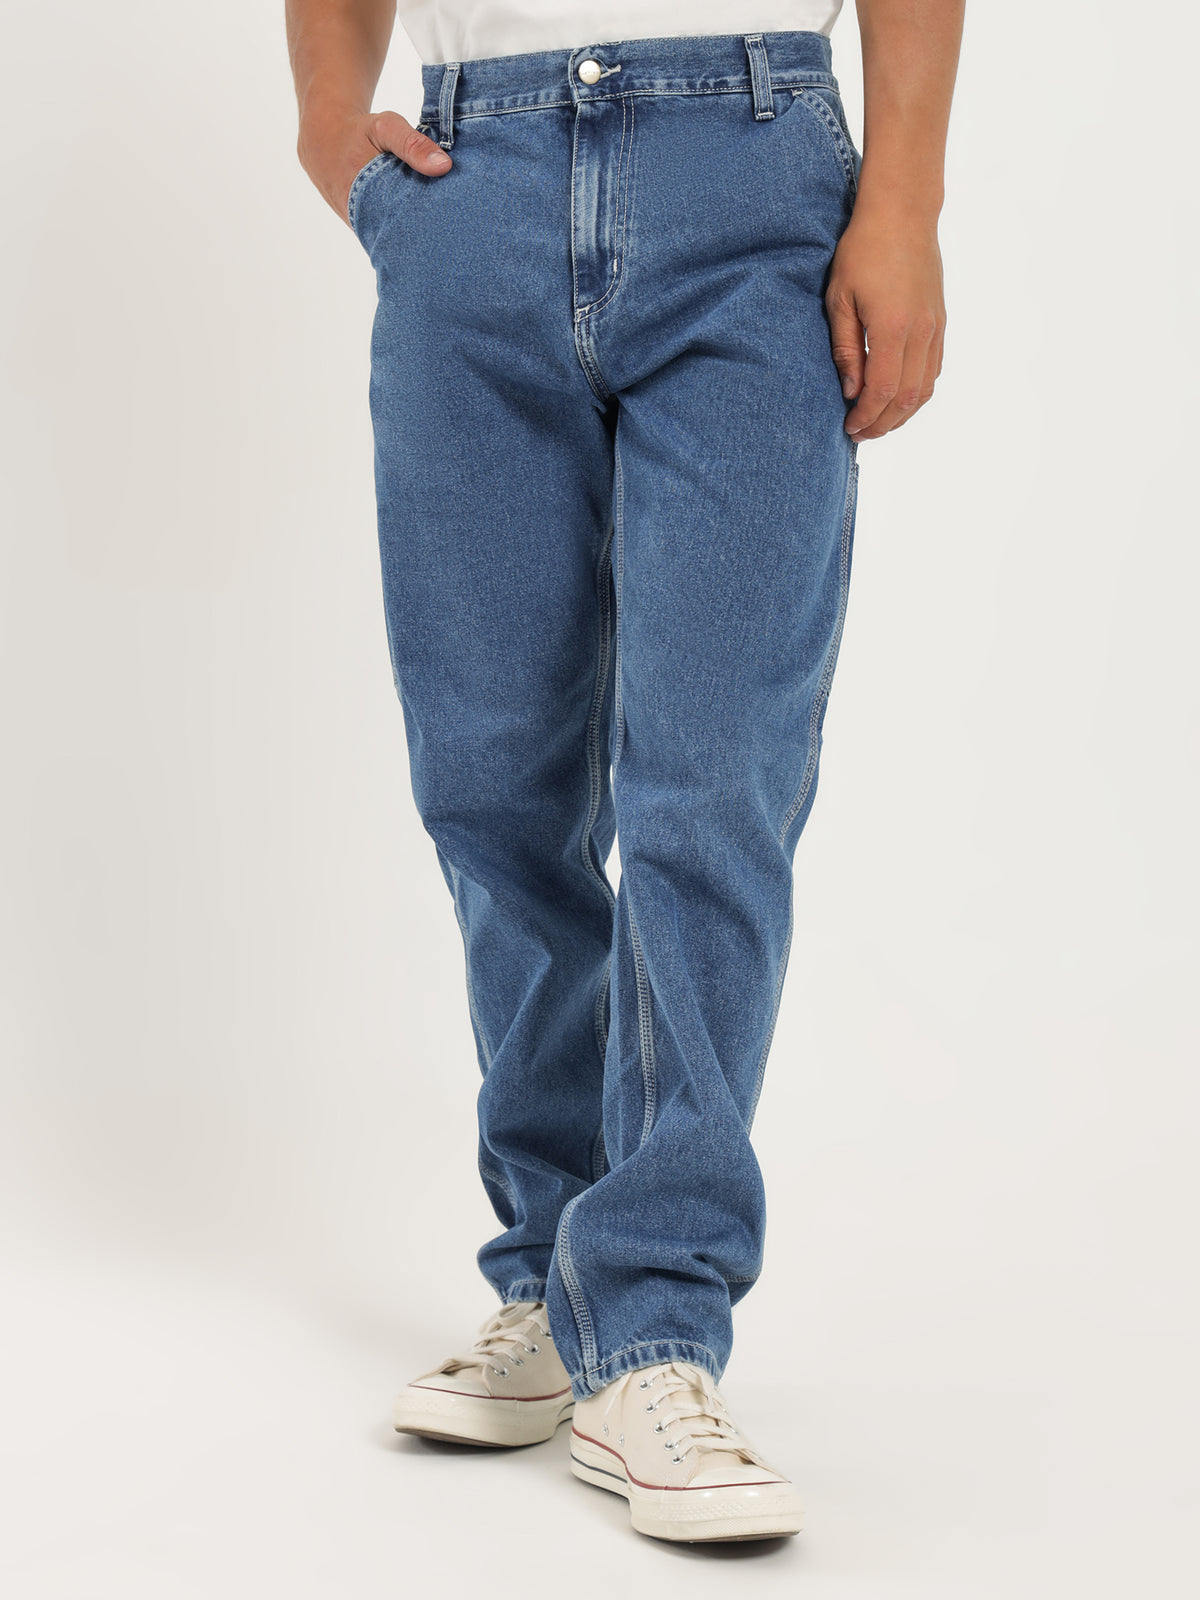 Ruck Single Knee Jeans in Denim Blue